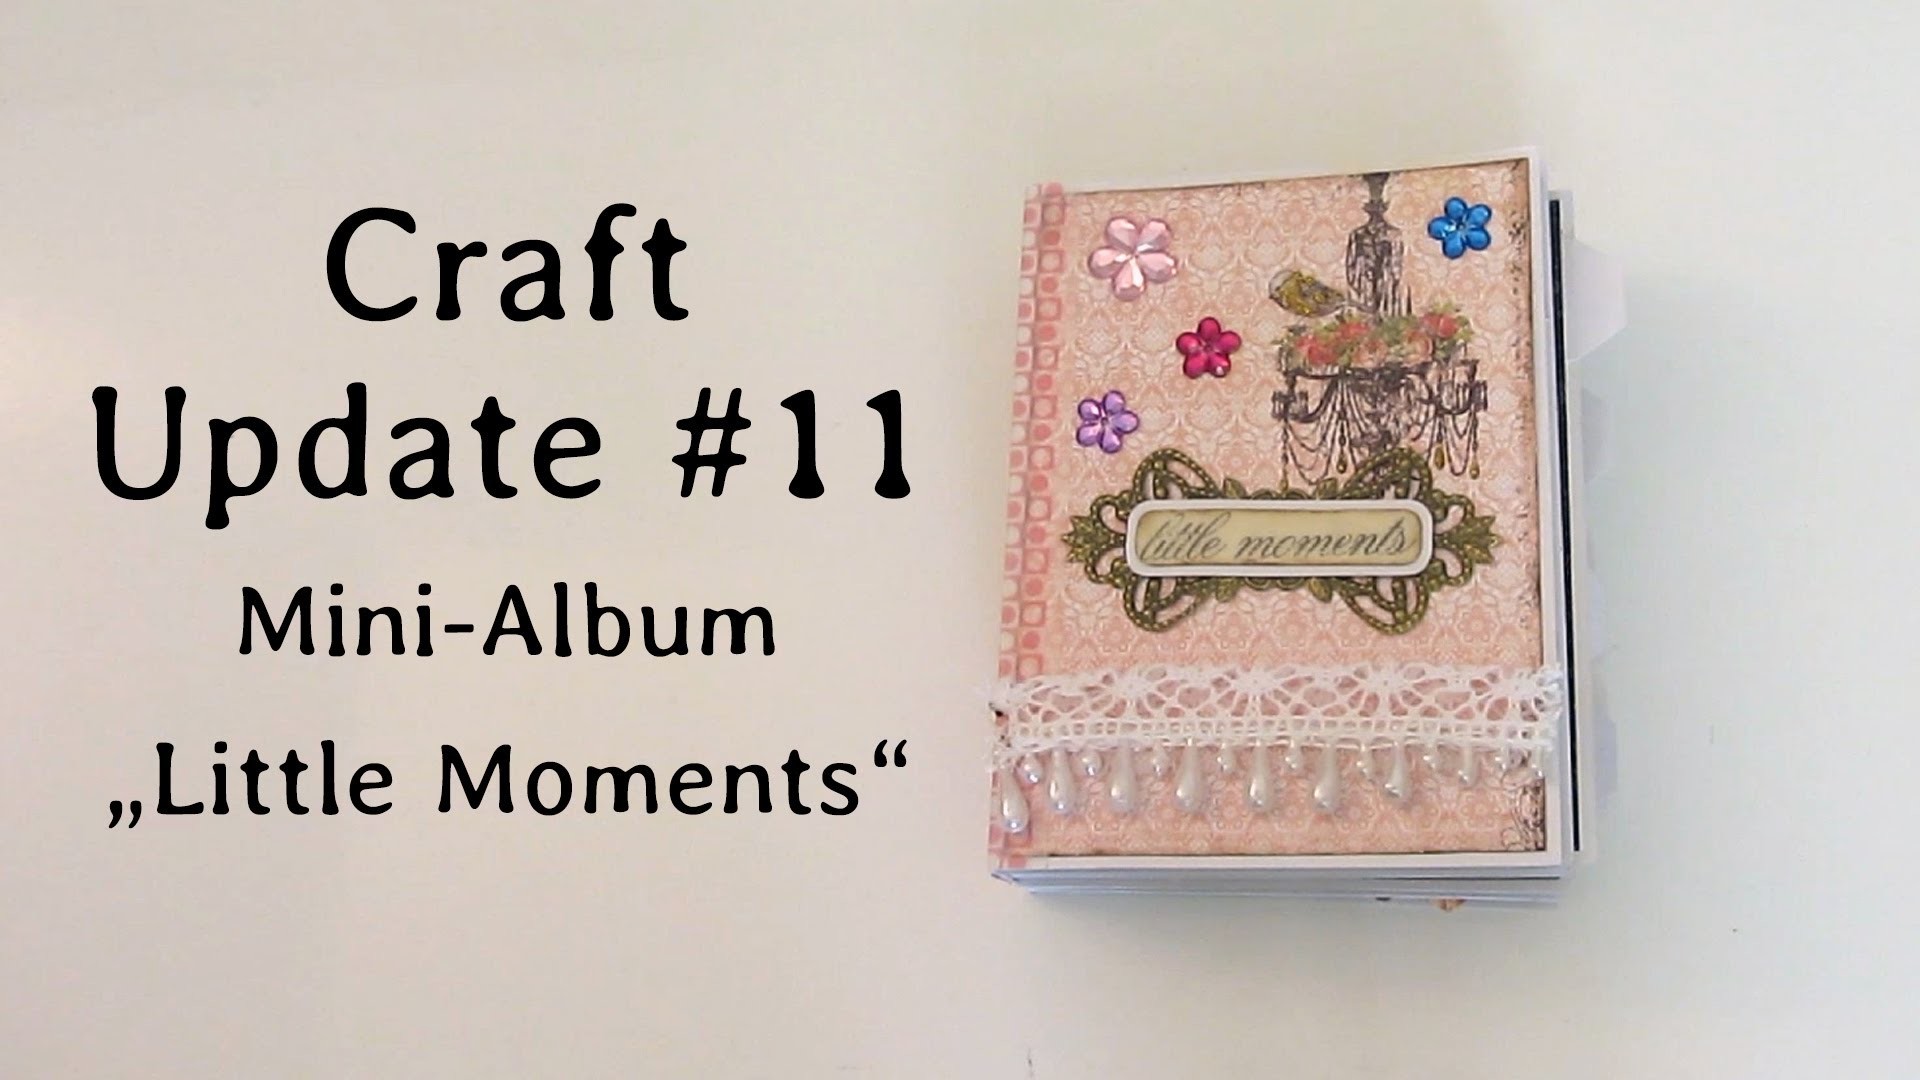 Craft Update #11 - Mini-Album "Little Moments"